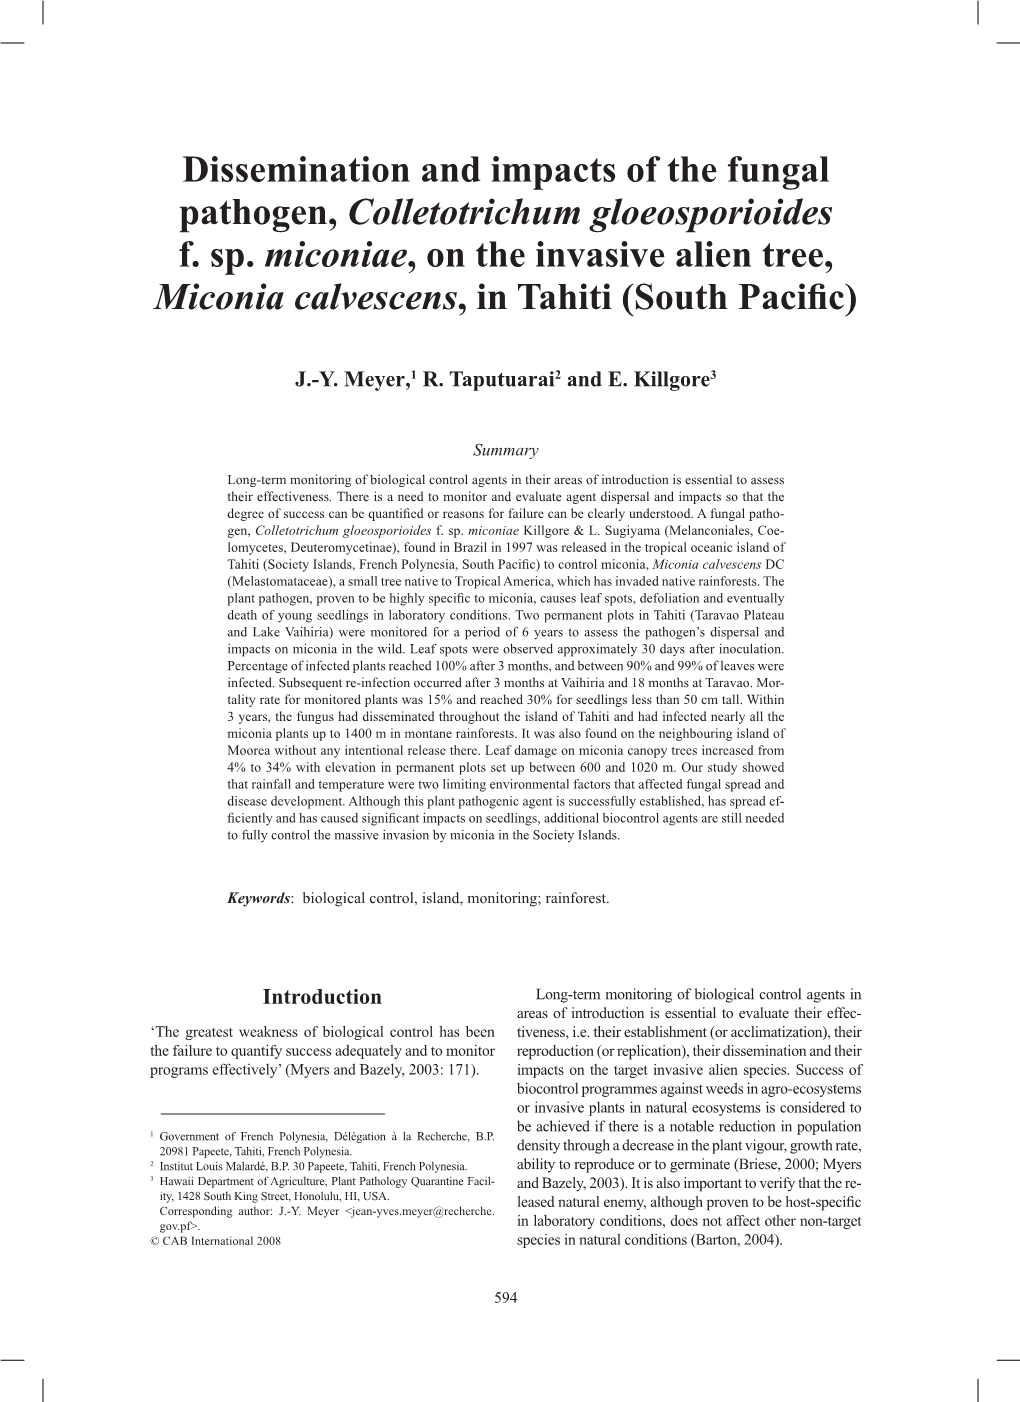 Dissemination and Impacts of the Fungal Pathogen, Colletotrichum Gloeosporioides F